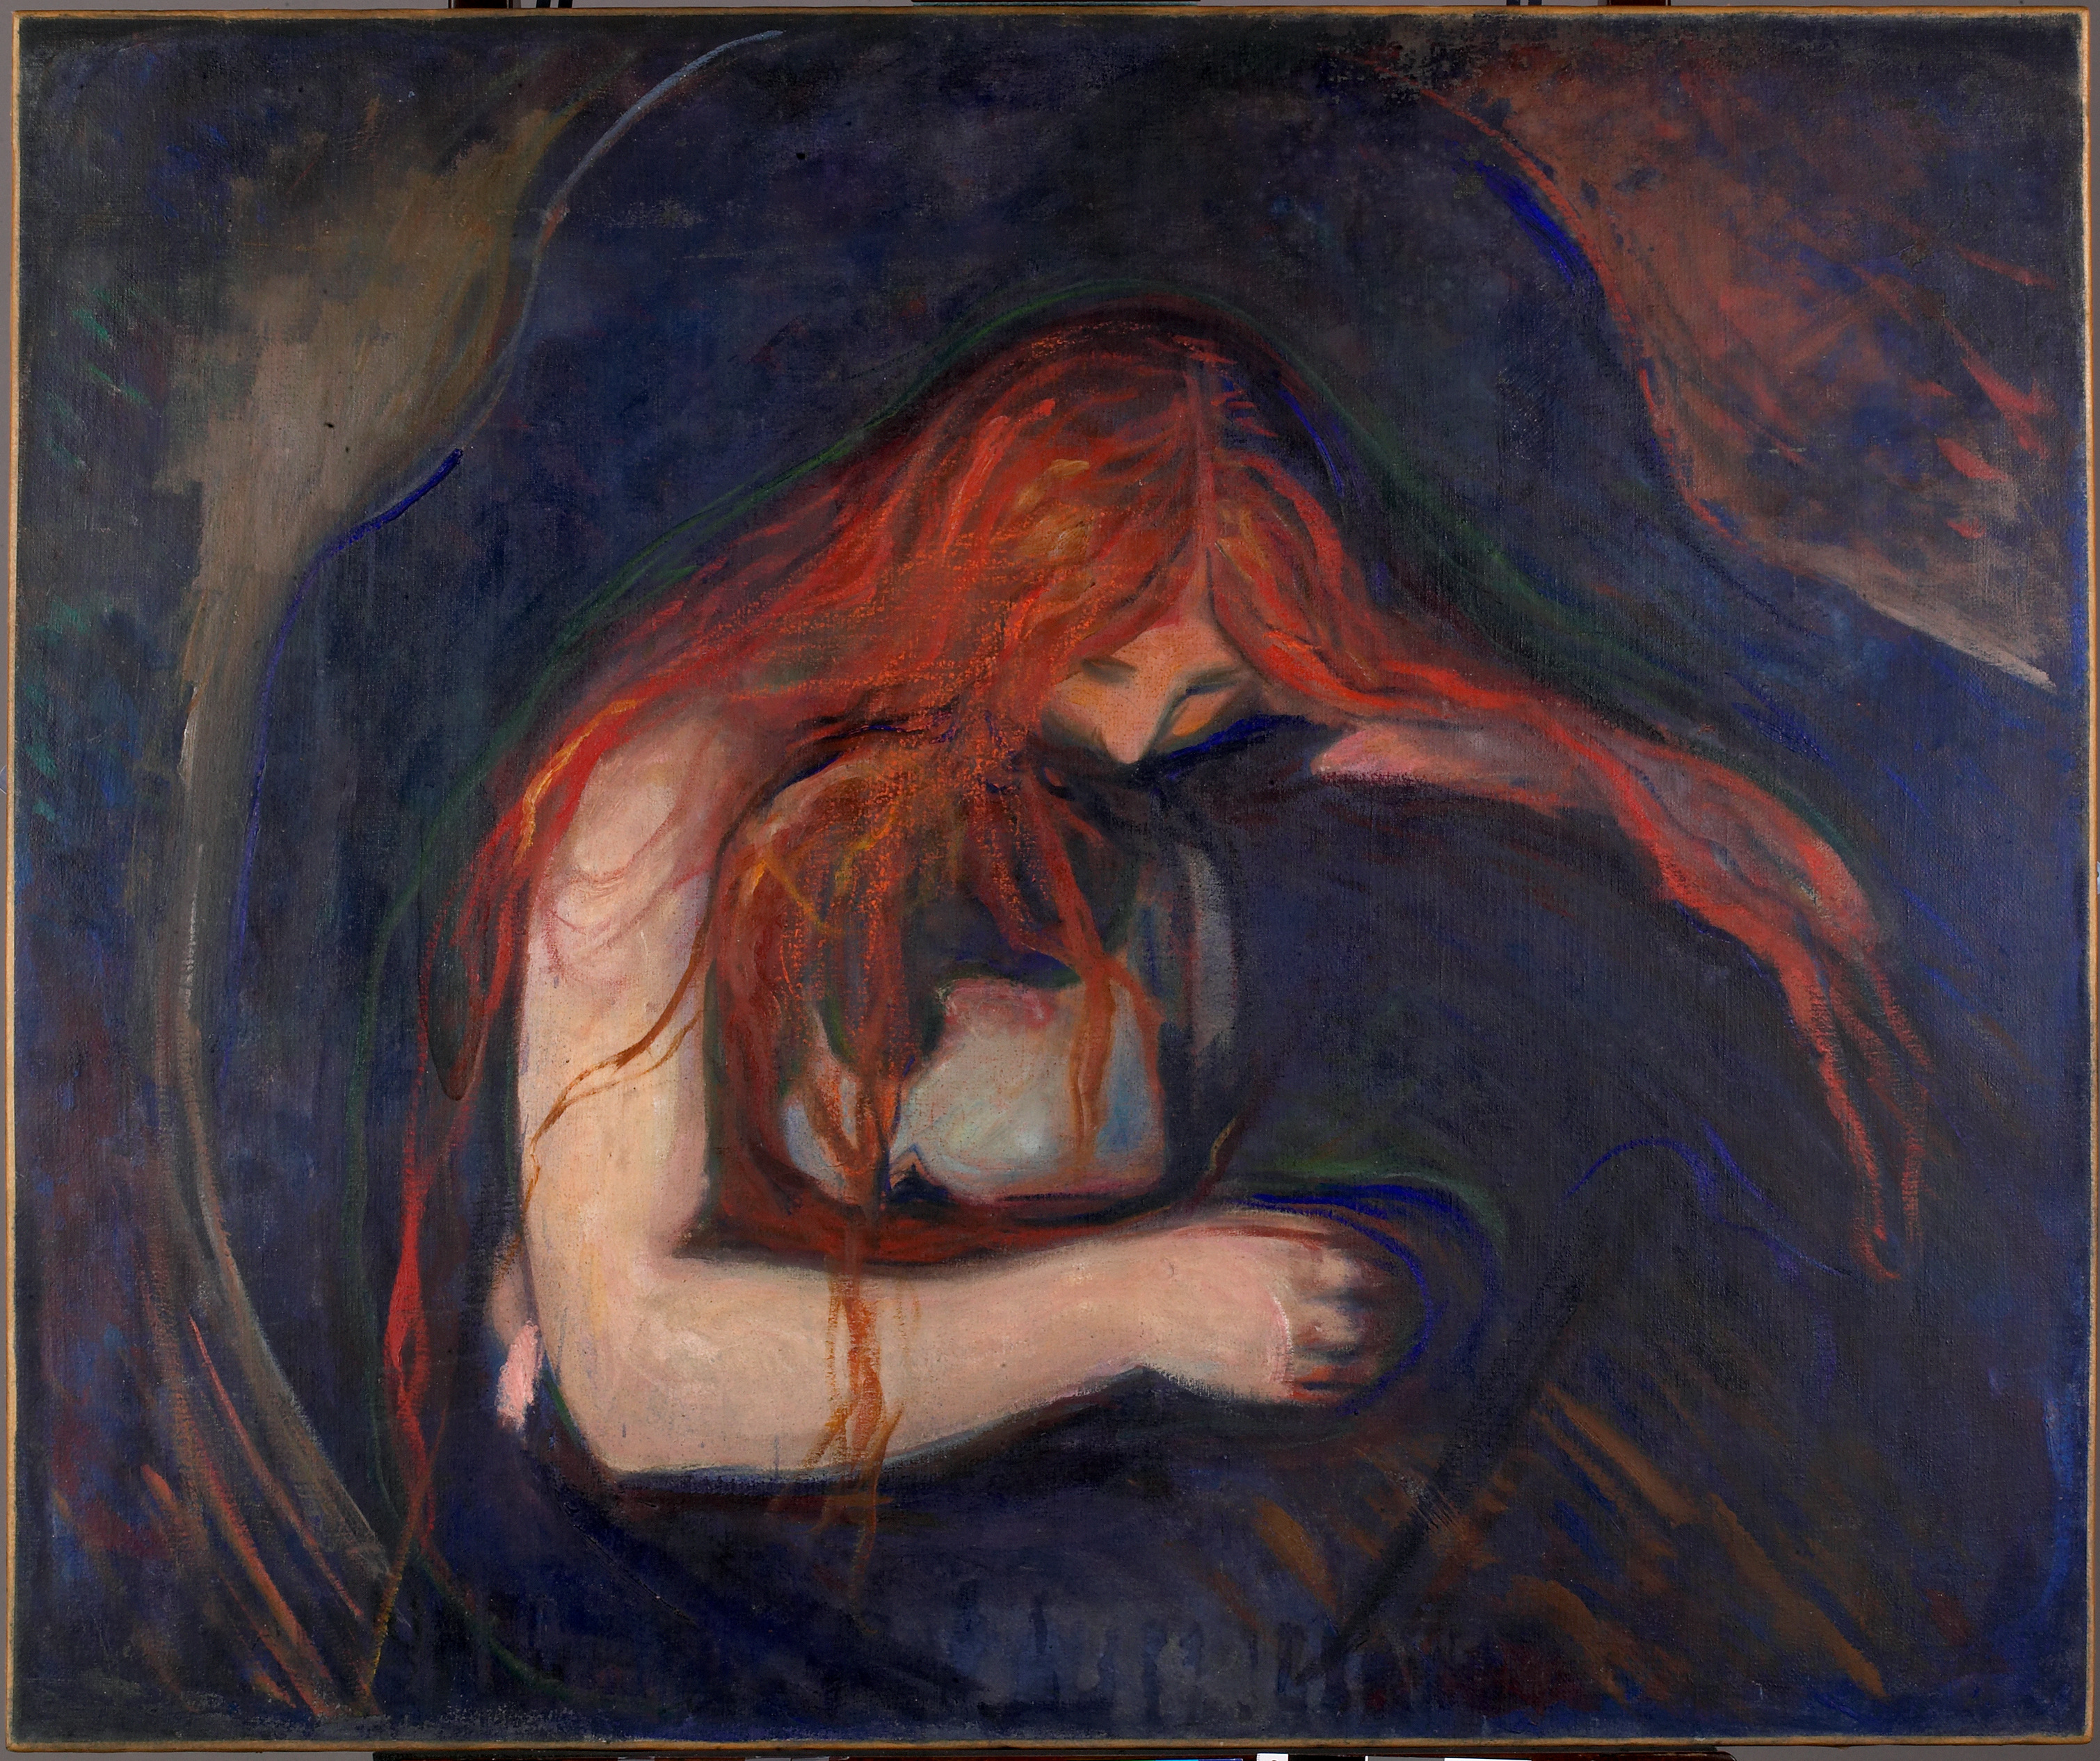 Vampiro by Edvard Munch - 1895 